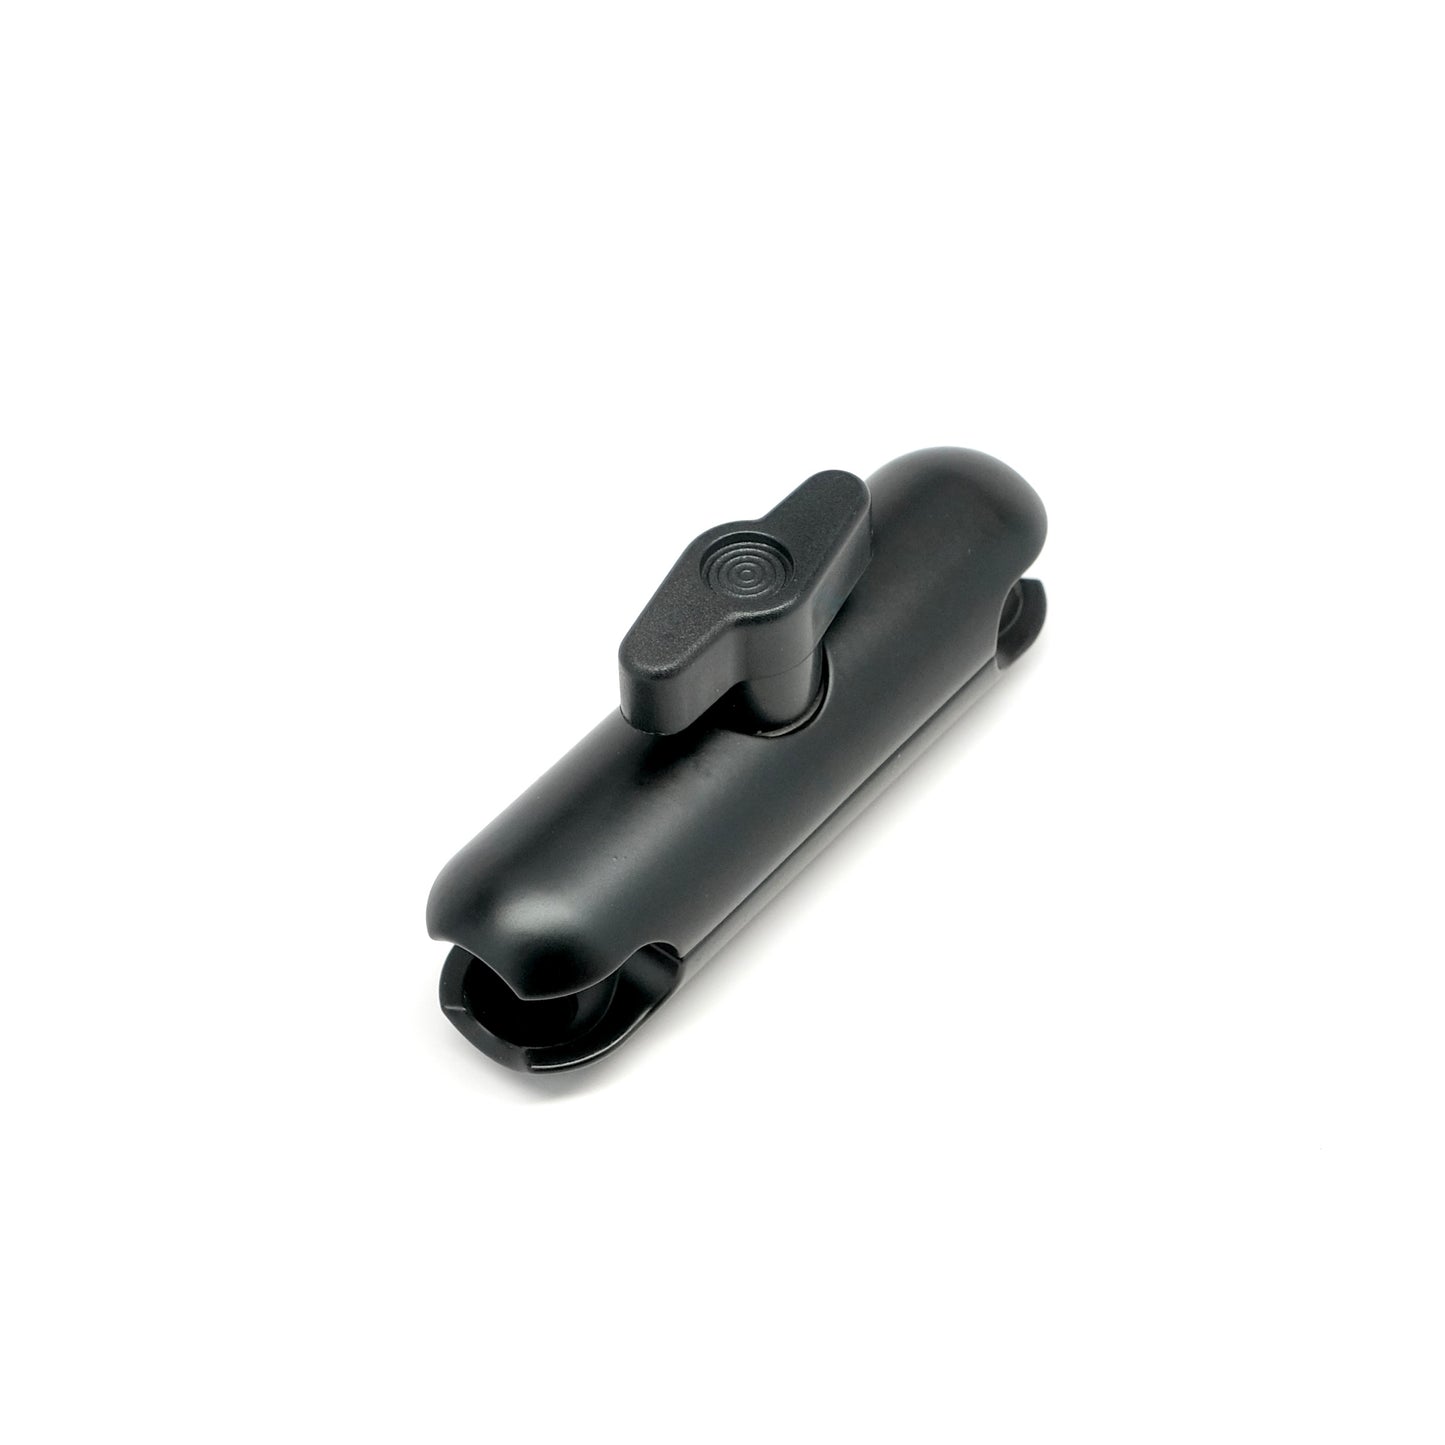 Double Socket Arm for 20mm Ball - Offroam